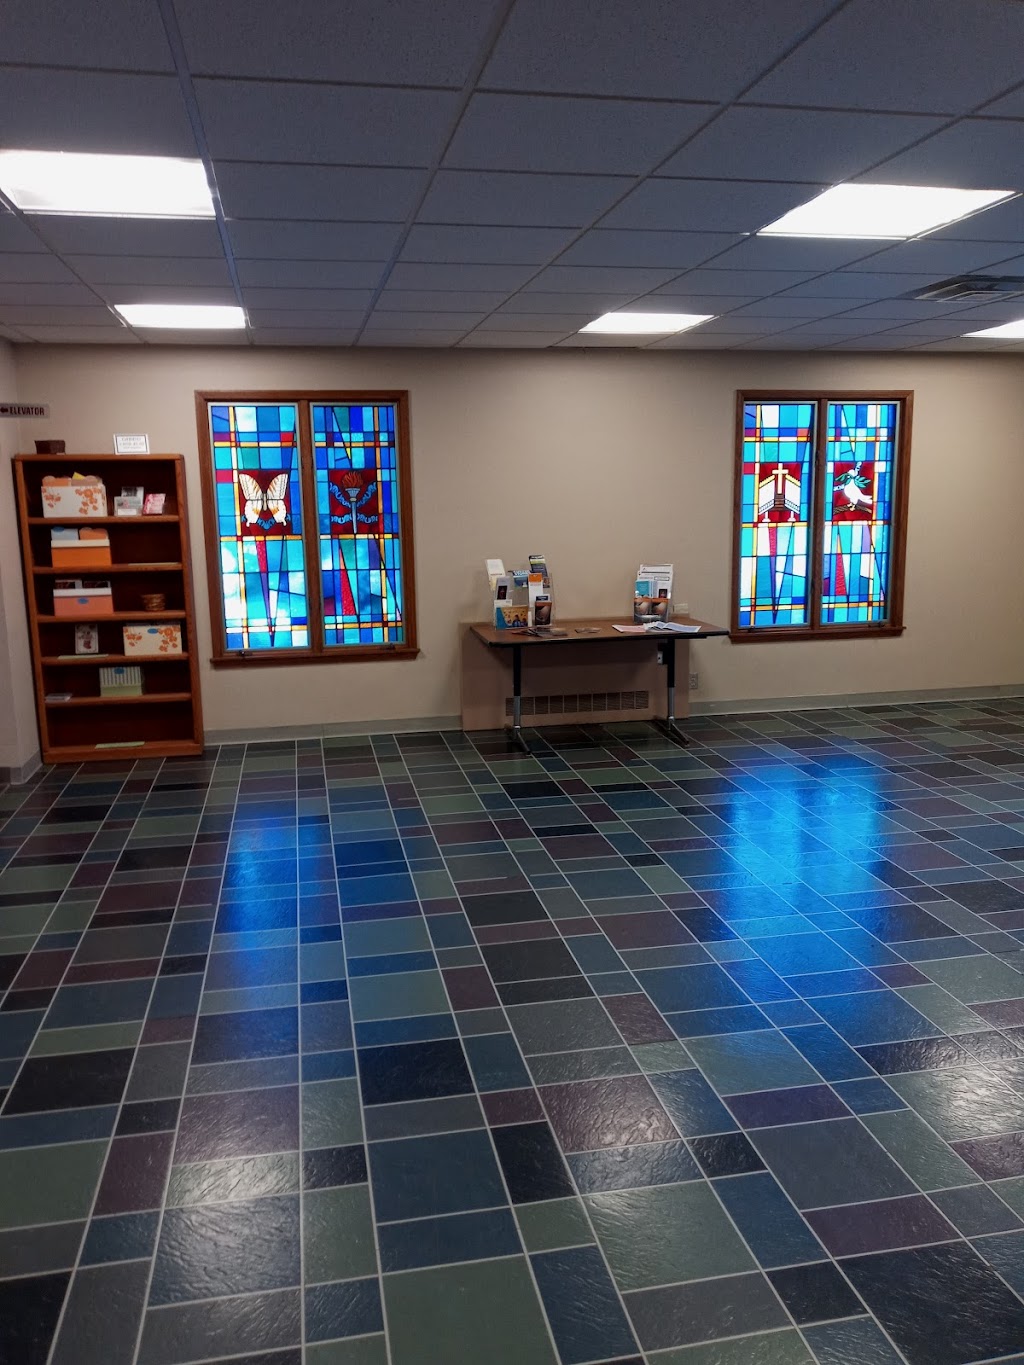 Rockbrook United Methodist Church | 9855 W Center Rd, Omaha, NE 68124, USA | Phone: (402) 393-1015